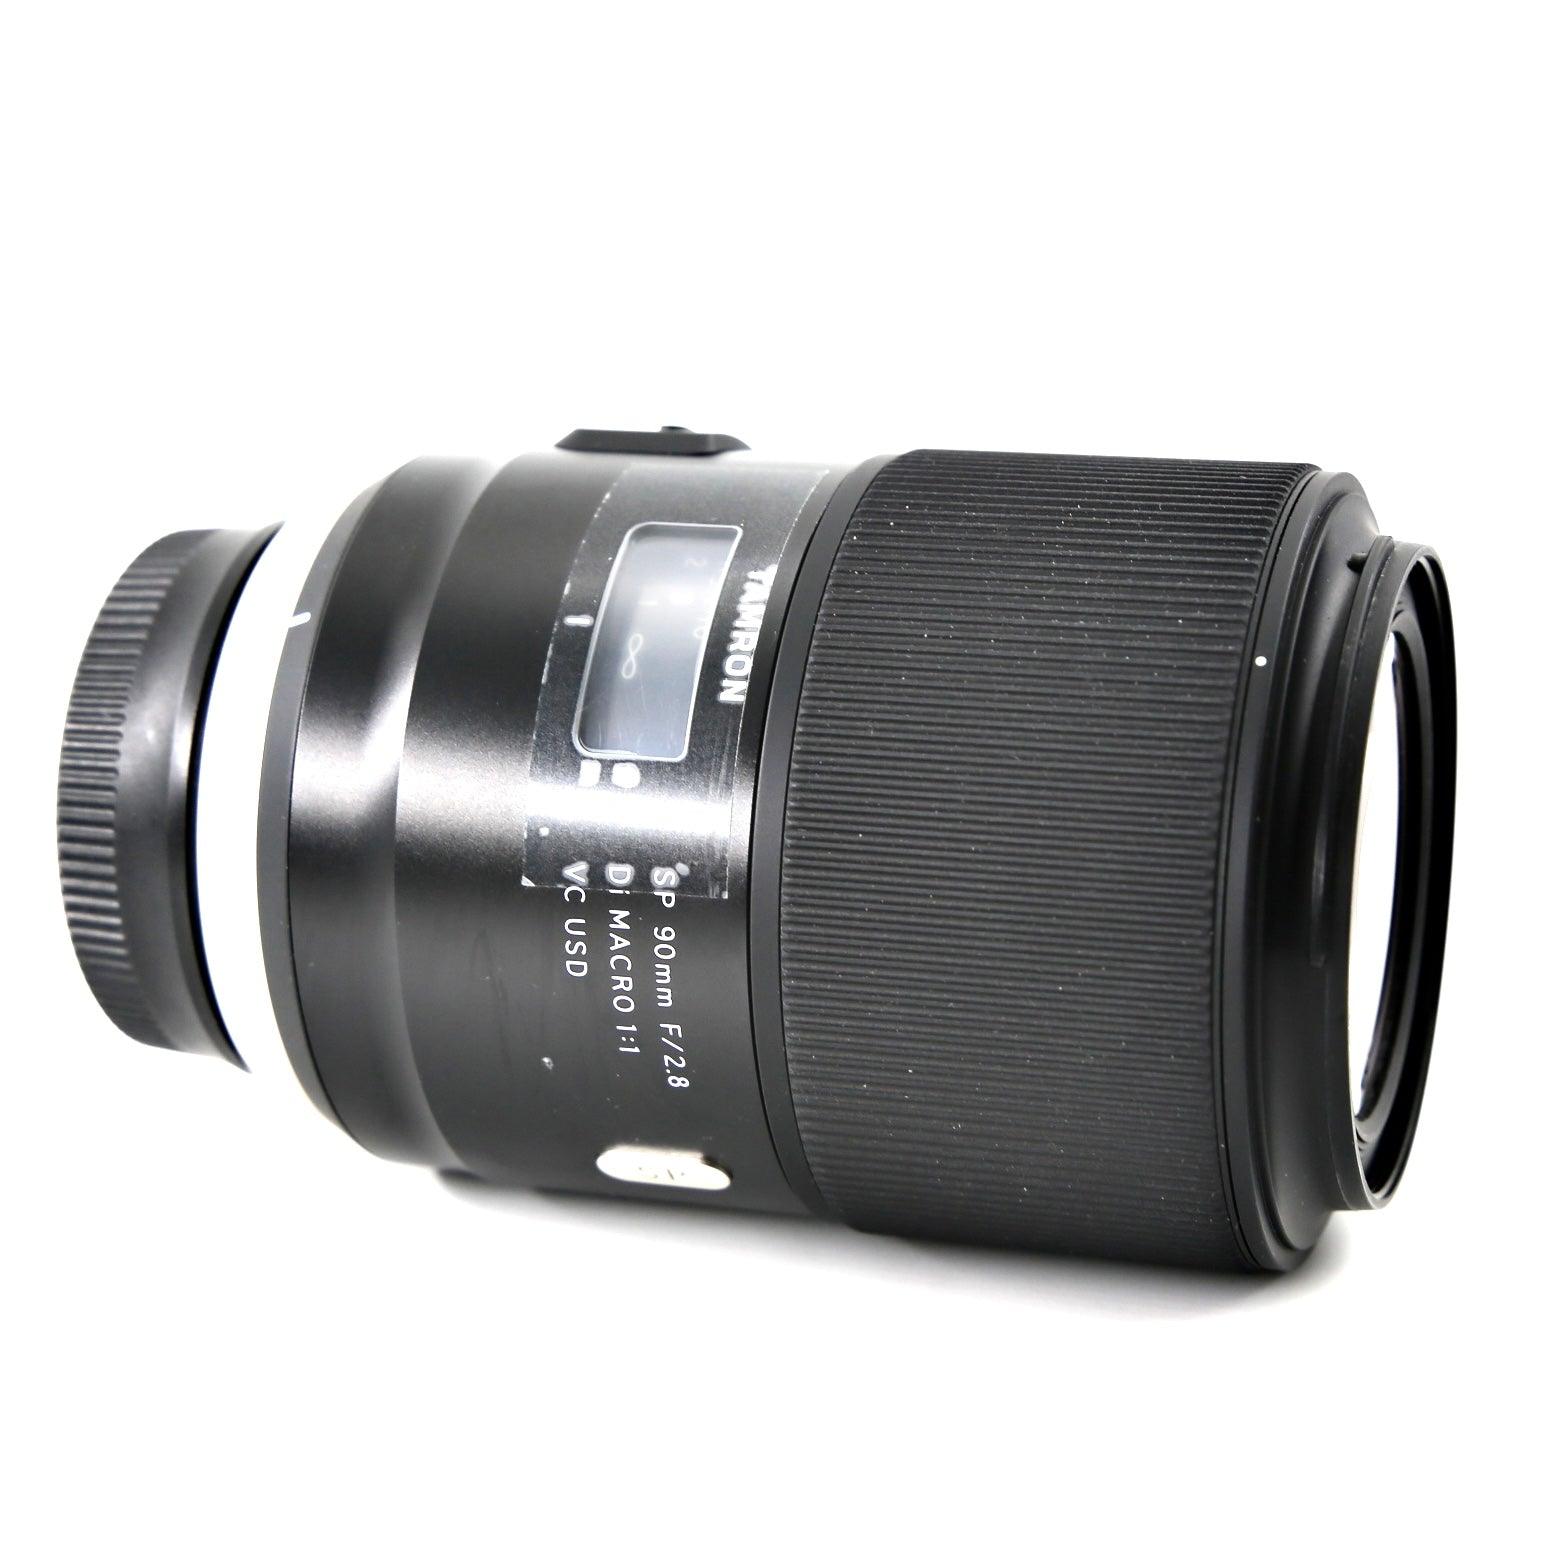 *** REFURB *** Tamron SP 90mm f/2.8 Di Macro 1:1 VC USD Lens for Nikon